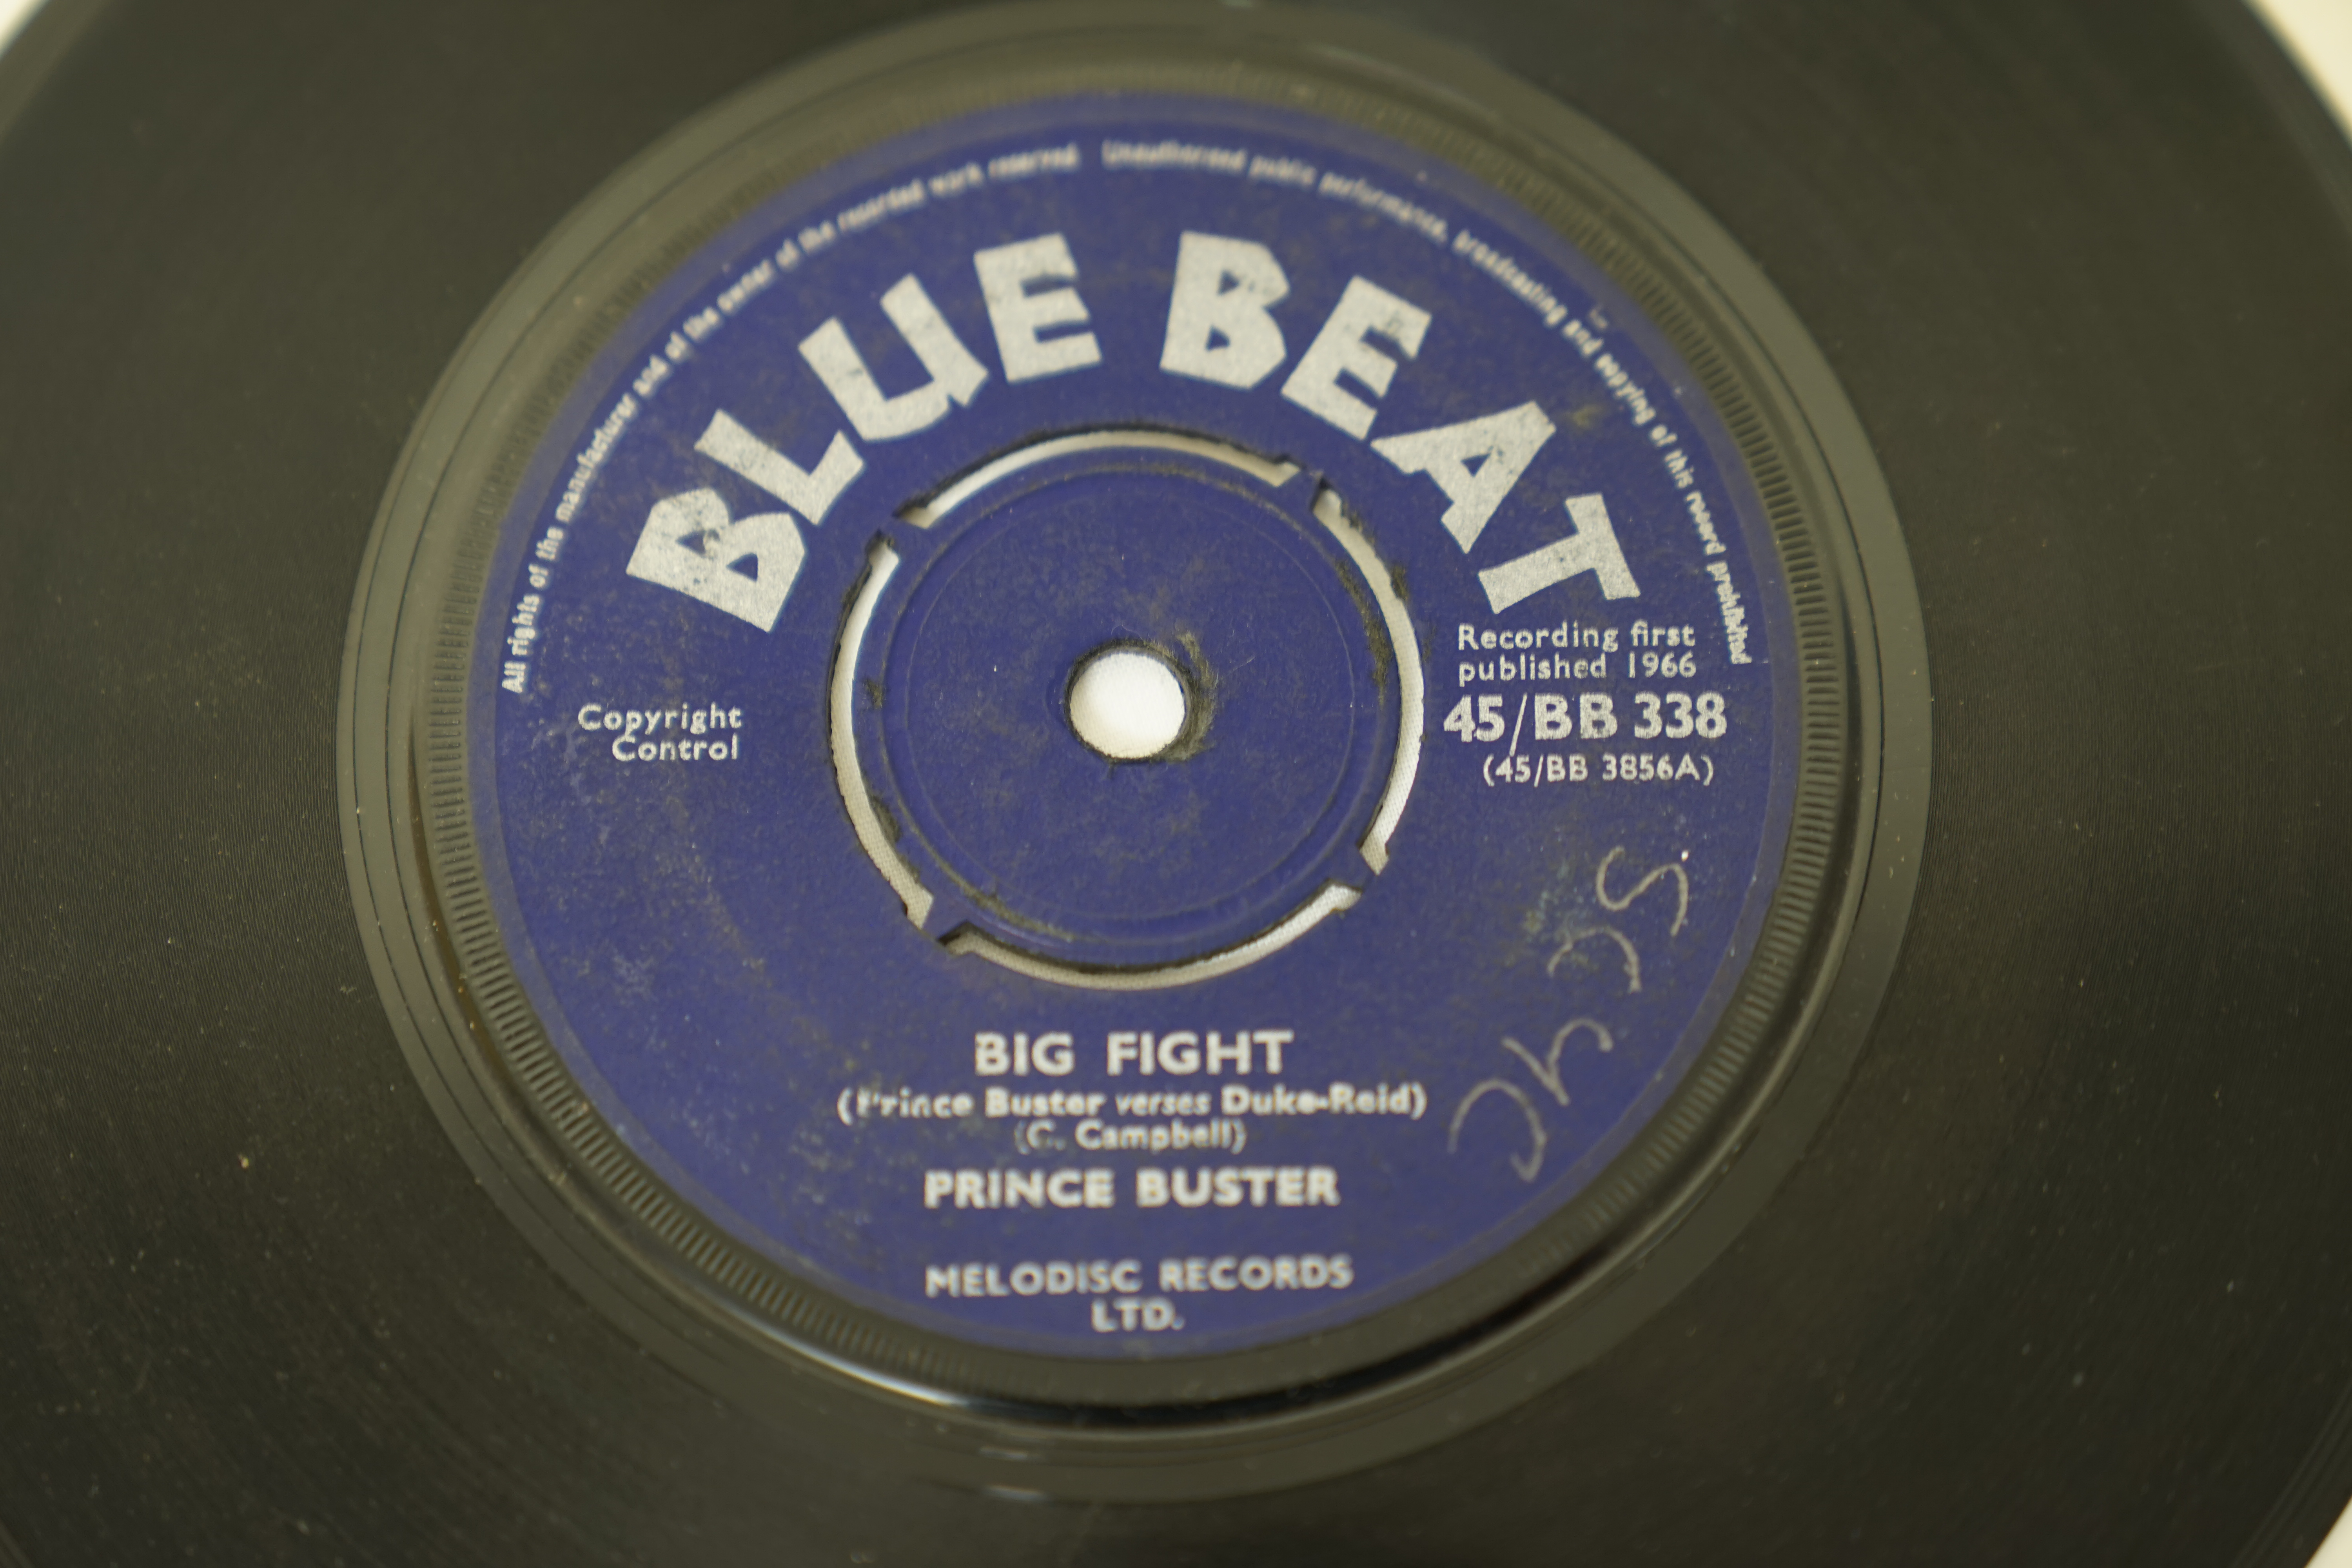 Vinyl - 6 UK Blue Beat Records / Prince Buster 7" singles, Reggae / Ska / Skinhead Reggae, - Image 15 of 25